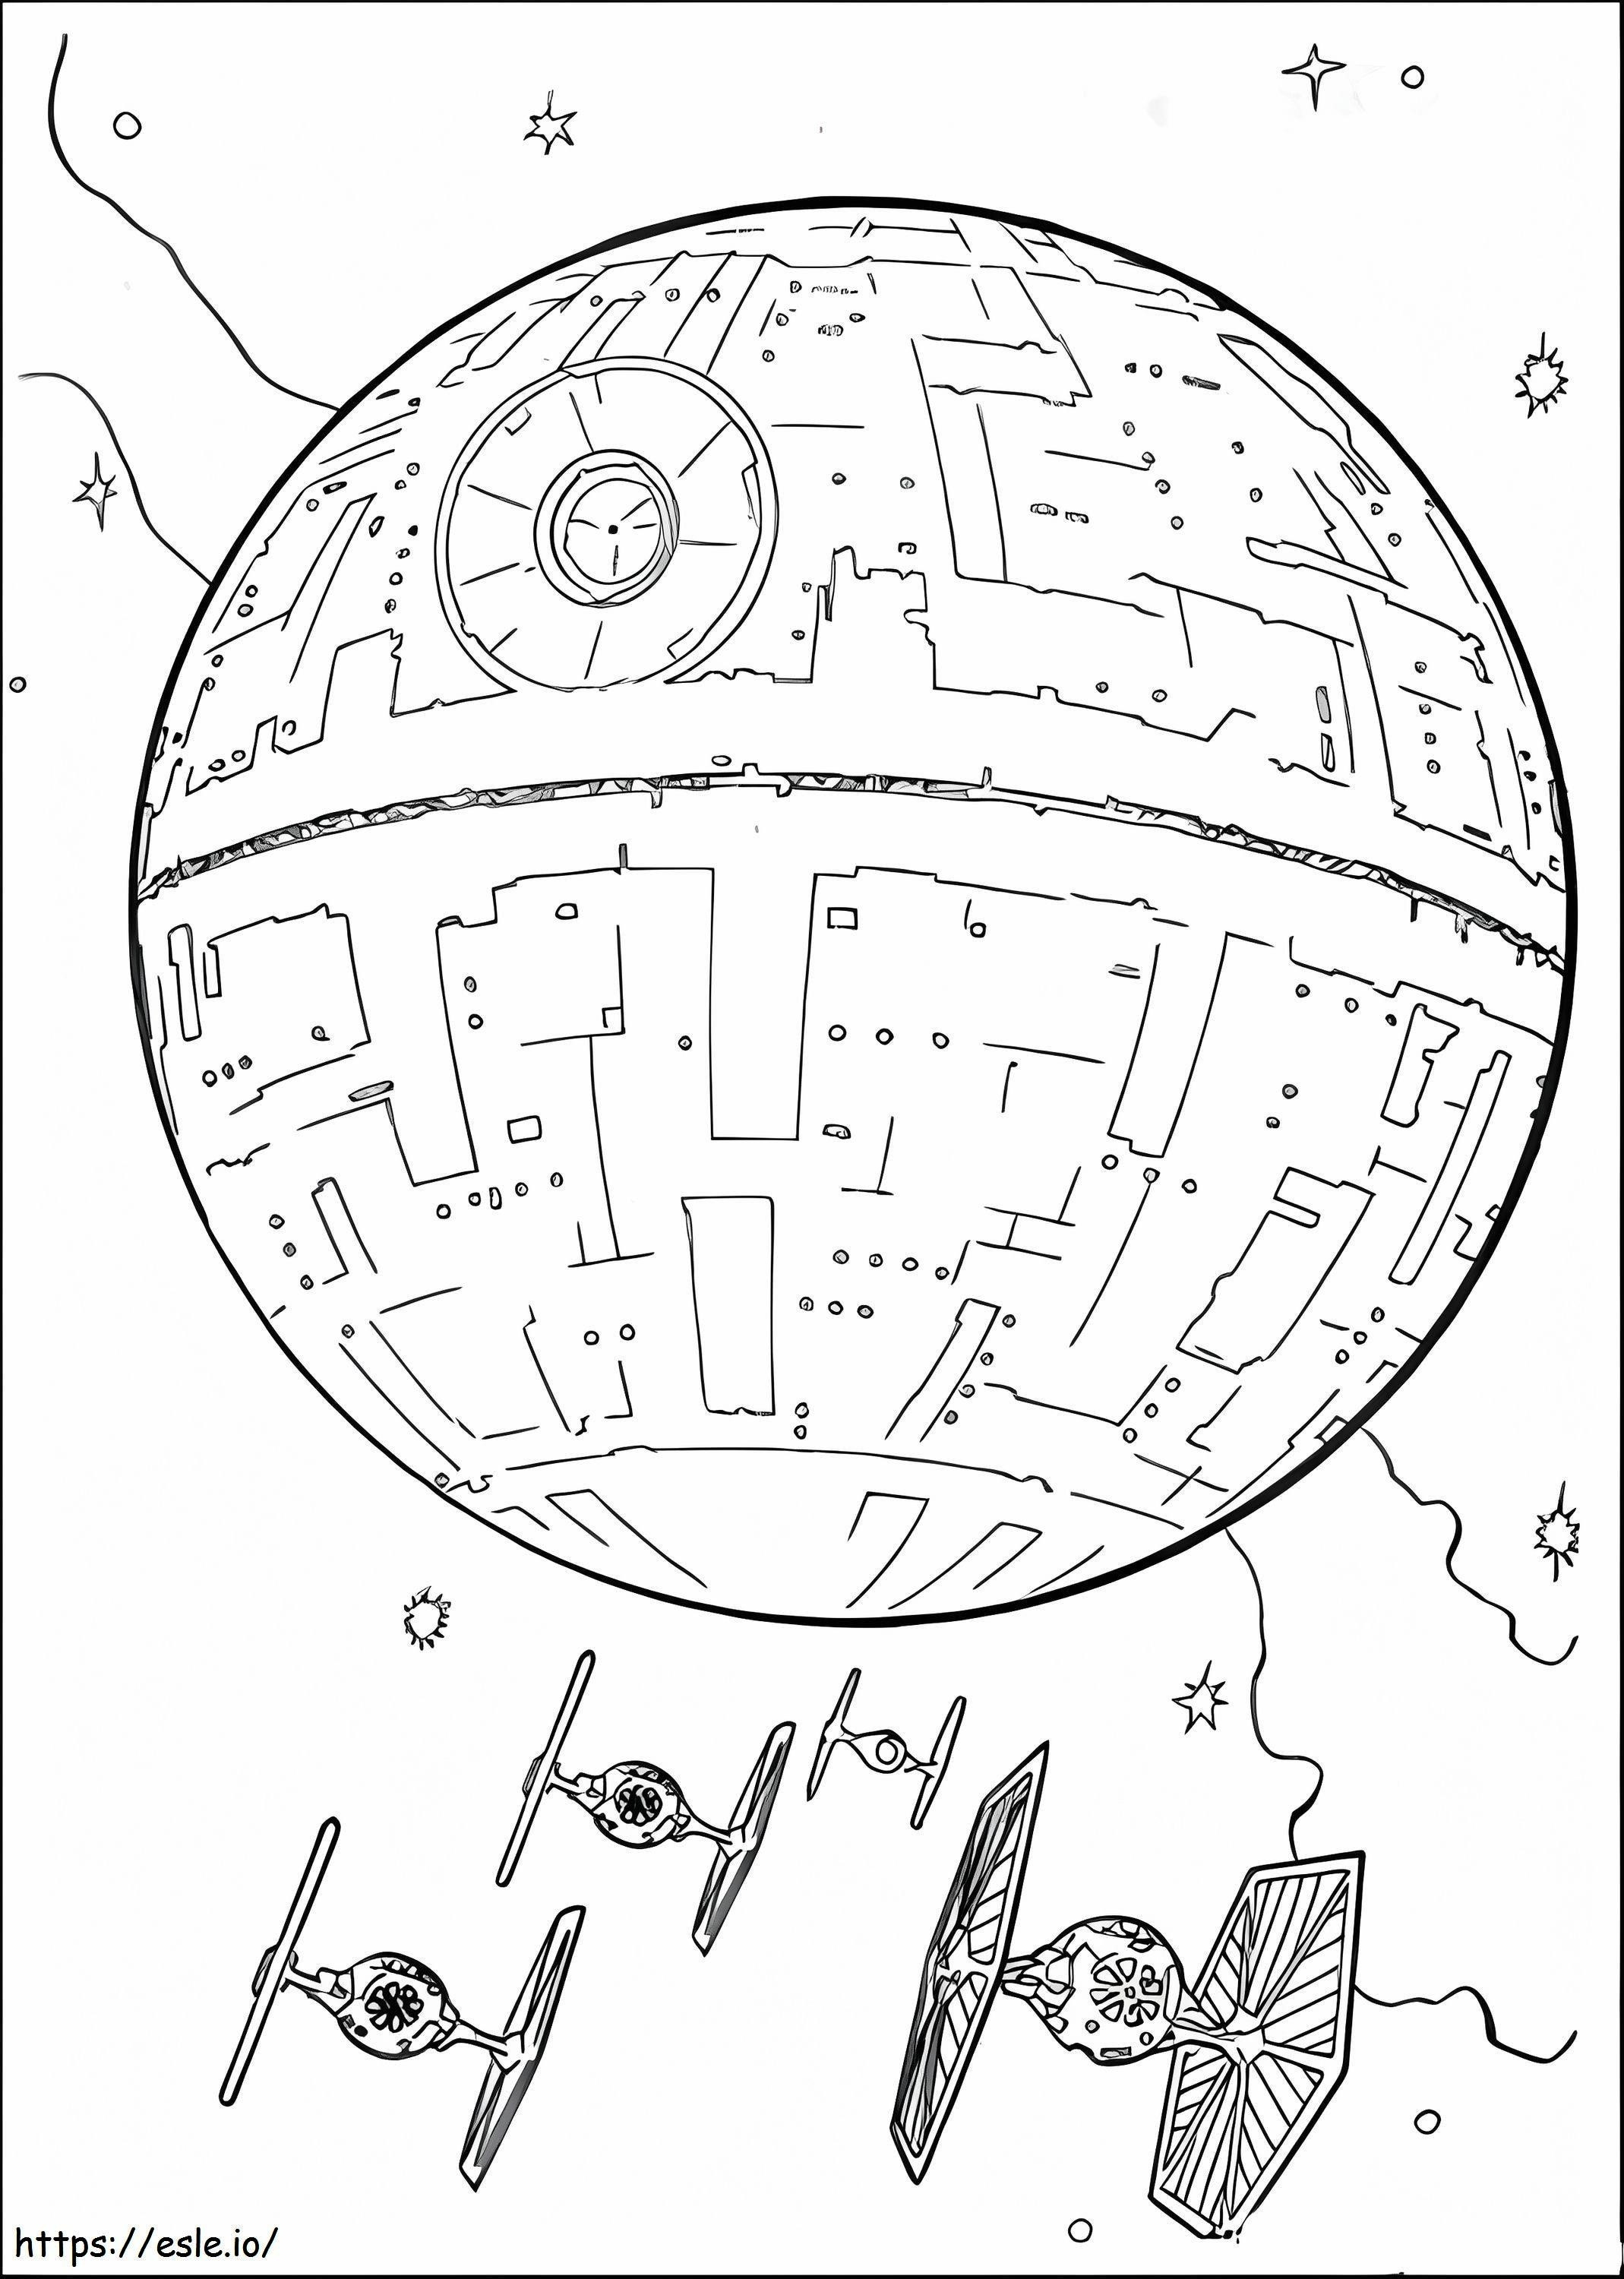 Circular Spaceship coloring page